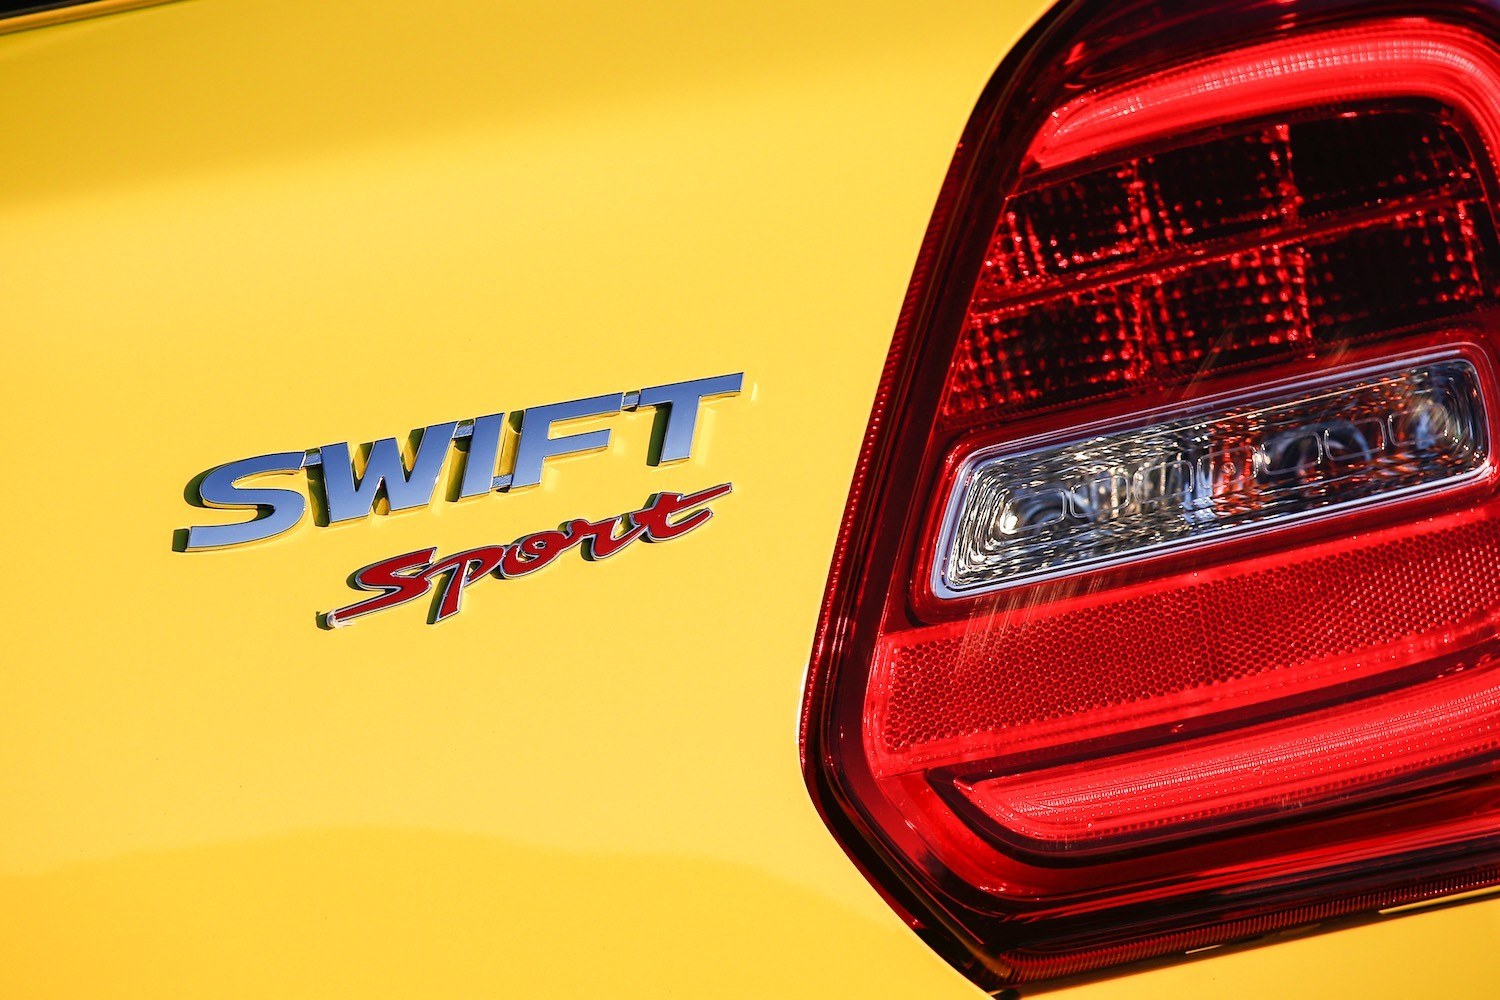 Tim Barnes-Clay drives the All New Suzuki Swift Sport at the European Launch 23